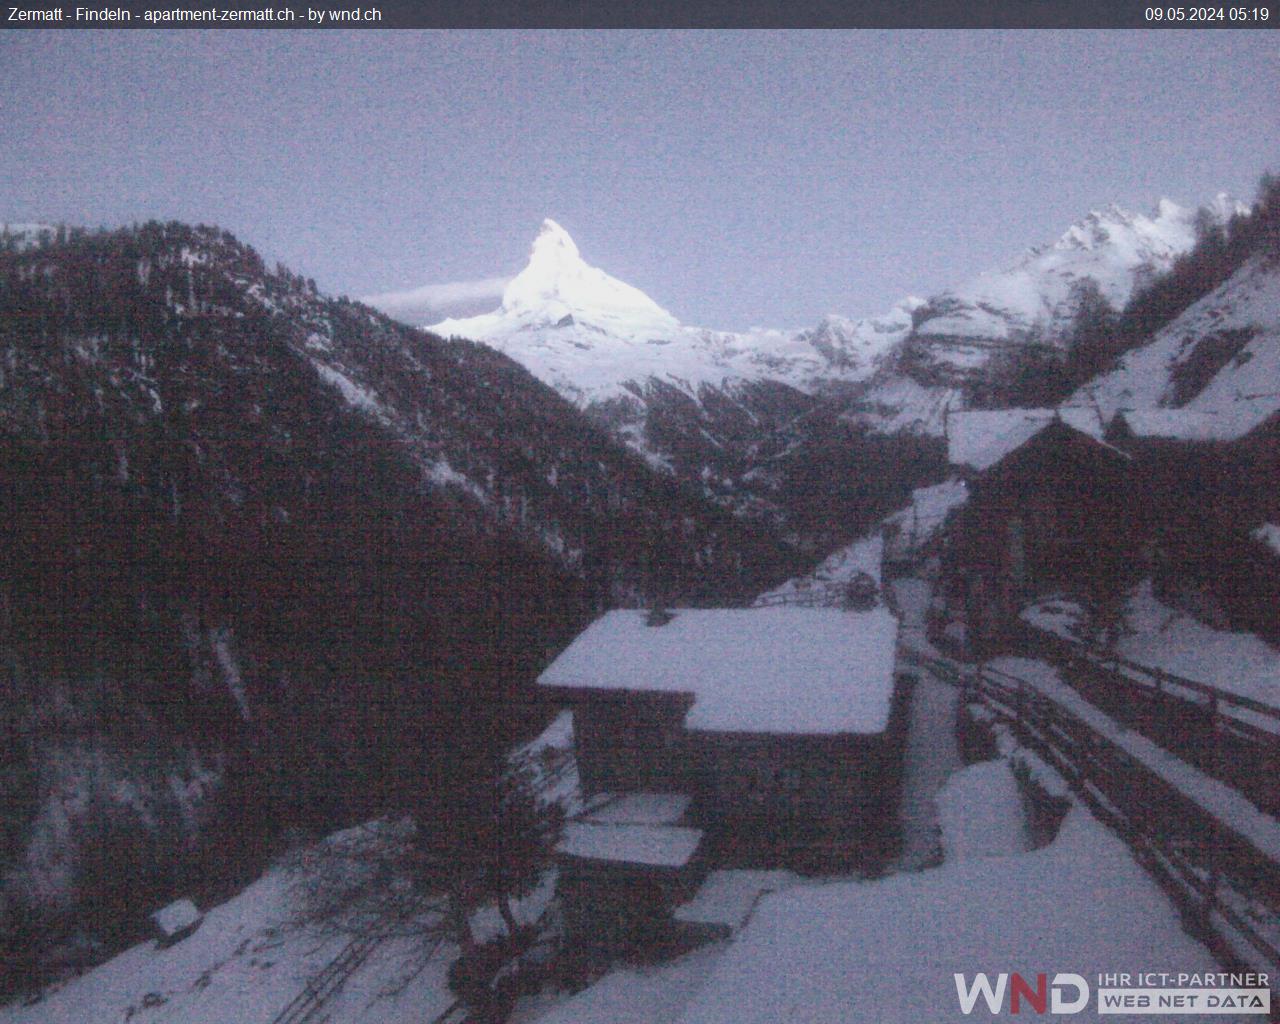 Zermatt Sun. 05:20